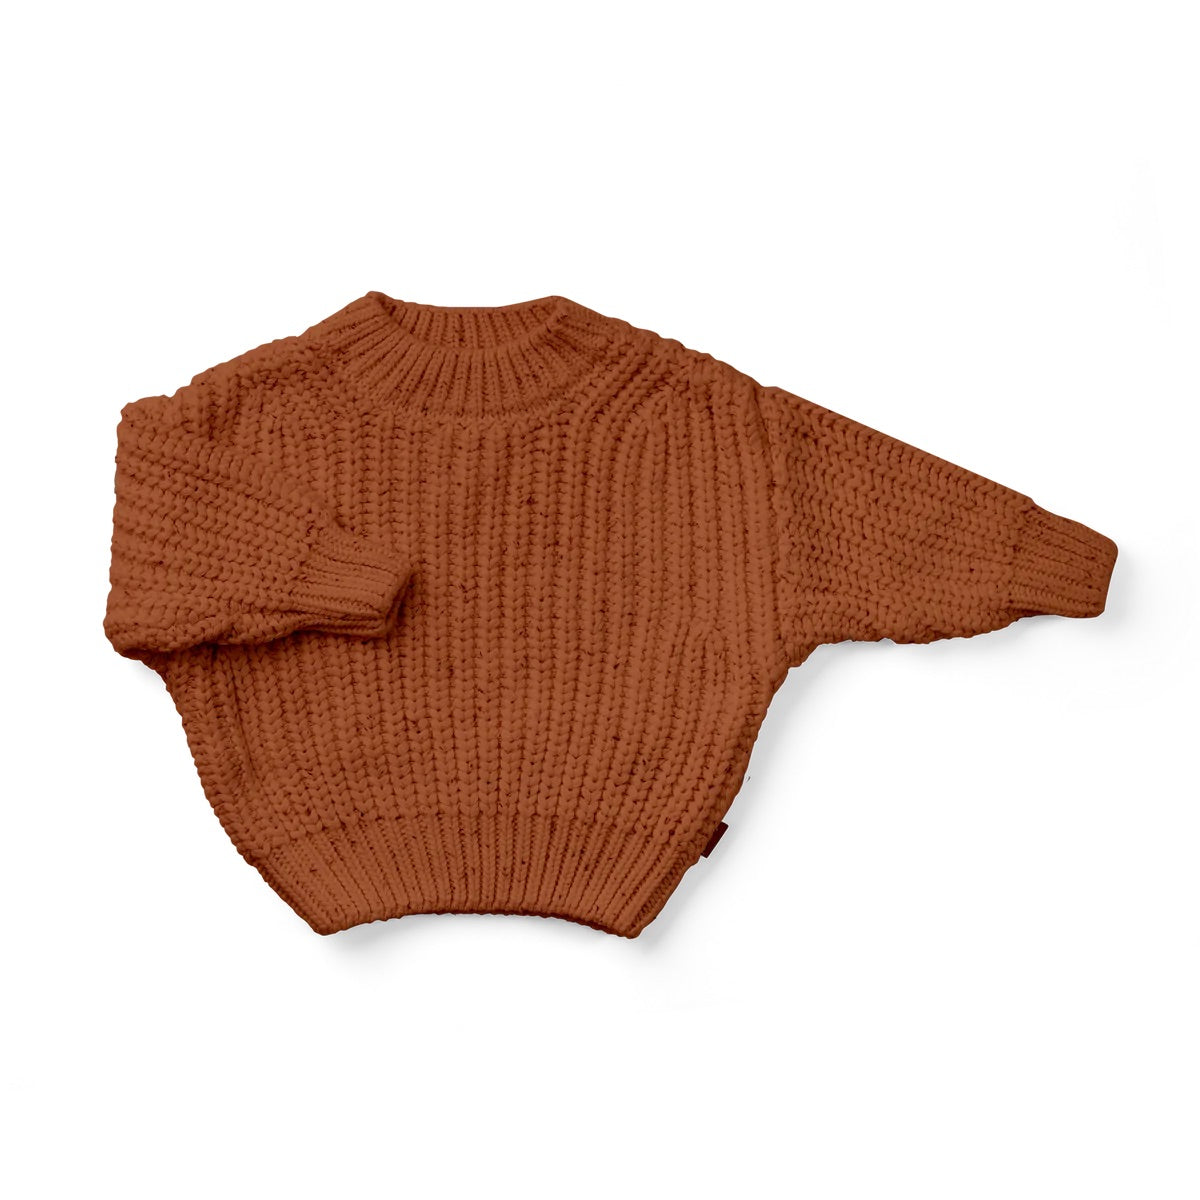 Goumikids Organic Cotton Kids Chunky Knit Sweater - Clay